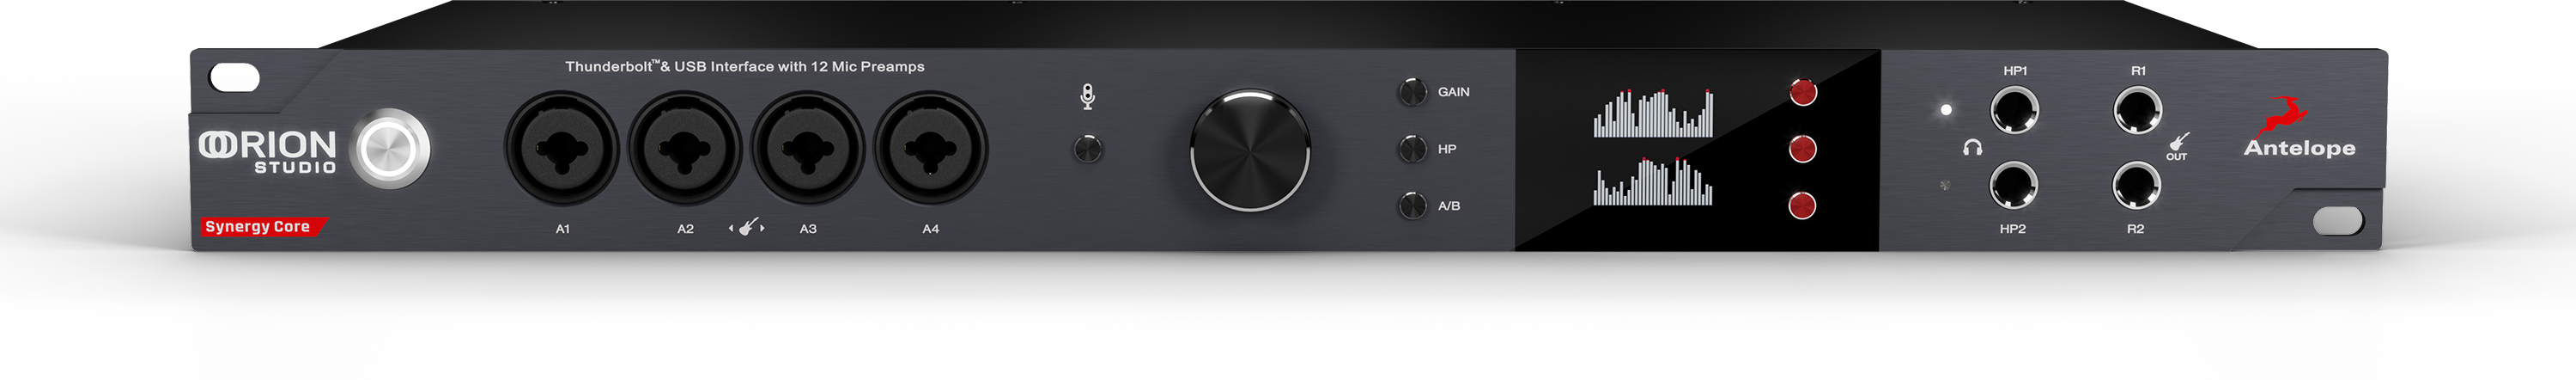 Antelope Audio Orion Studio Synergy Core - Thunderbolt audio interface - Main picture